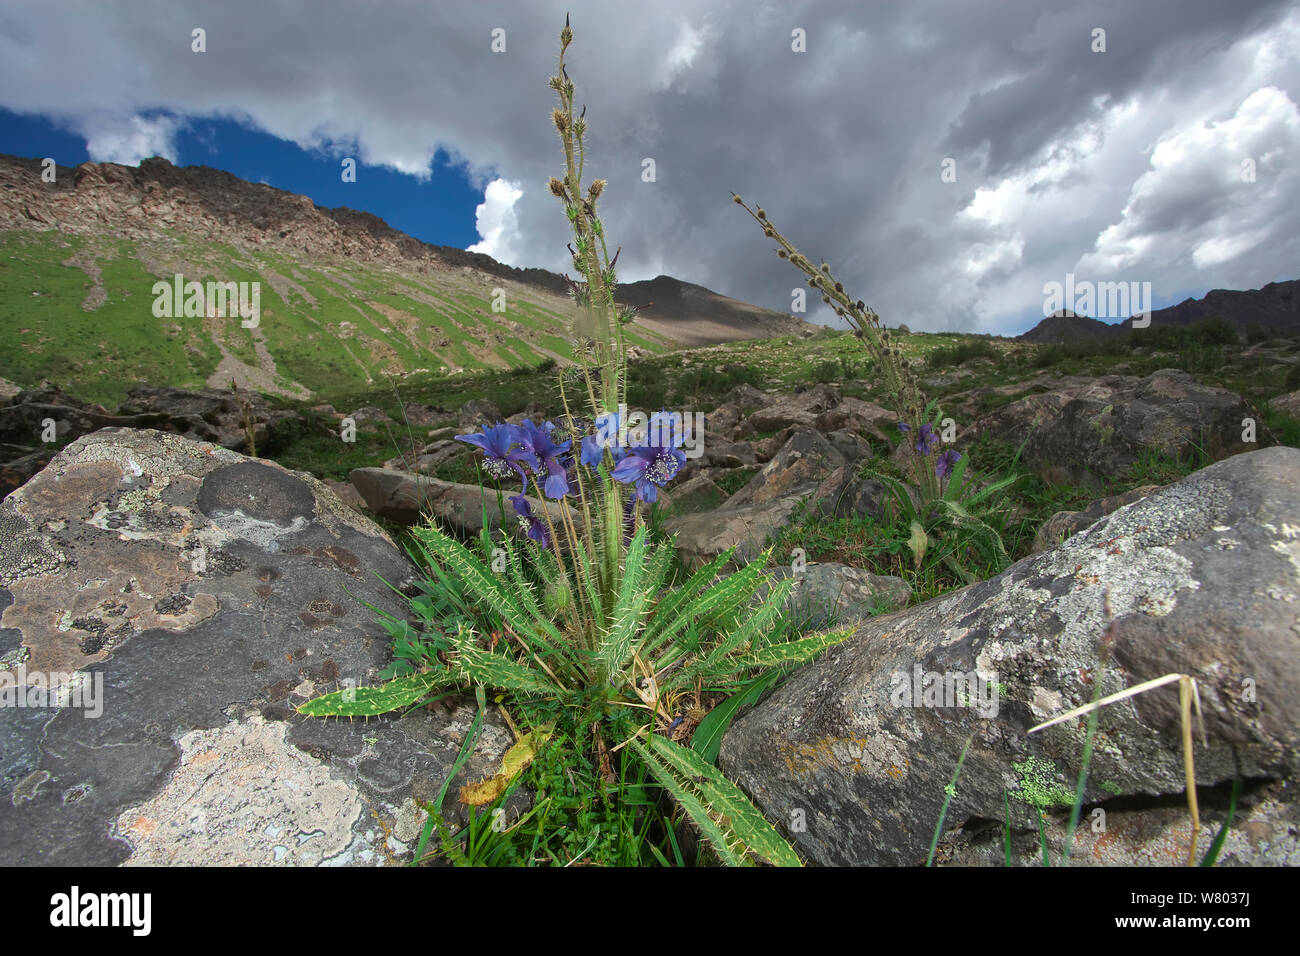 Prickly blue poppy (Meconopsis horridula) in habitat, Serxu, Shiqu county, Sichuan Province, Qinghai-Tibet Plateau, China. Stock Photo